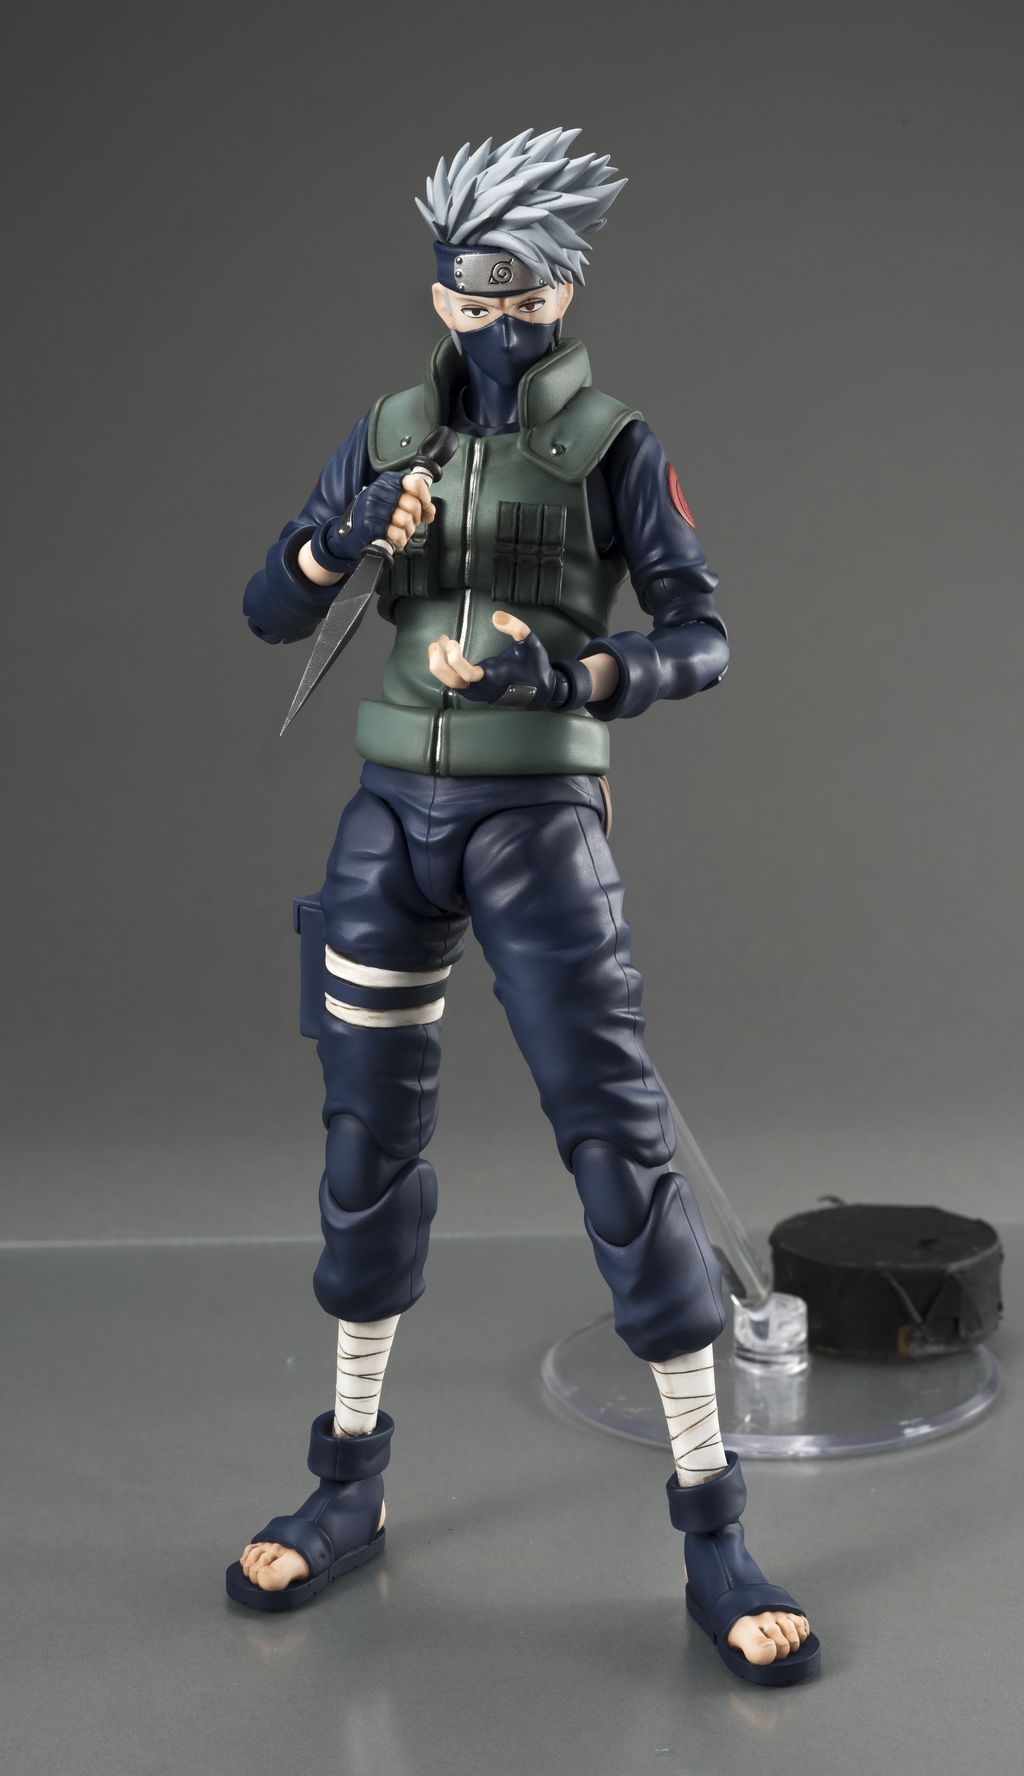 Kakashi Hatake DX Collectible Figure by MegaHouse